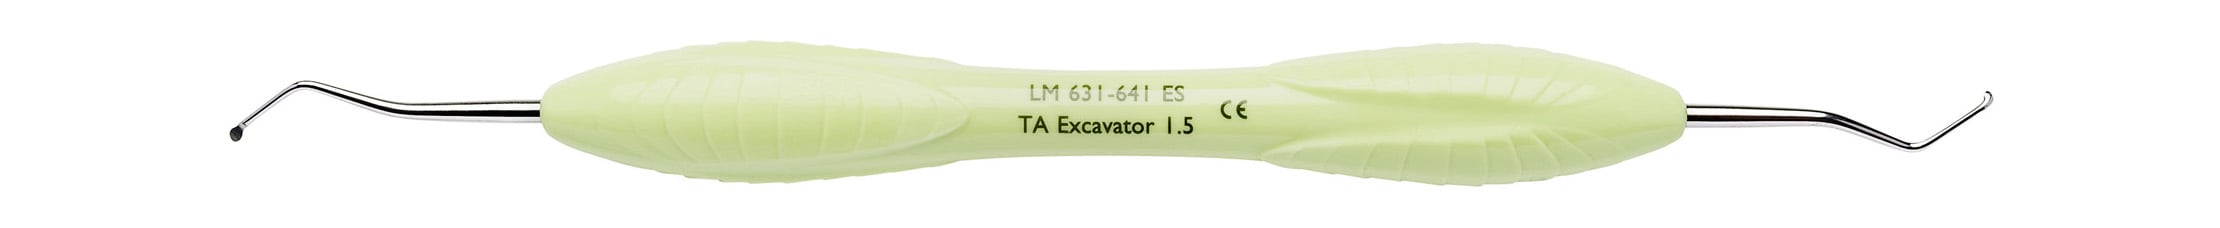 LM Excavator 1,5mm 631-641 ES